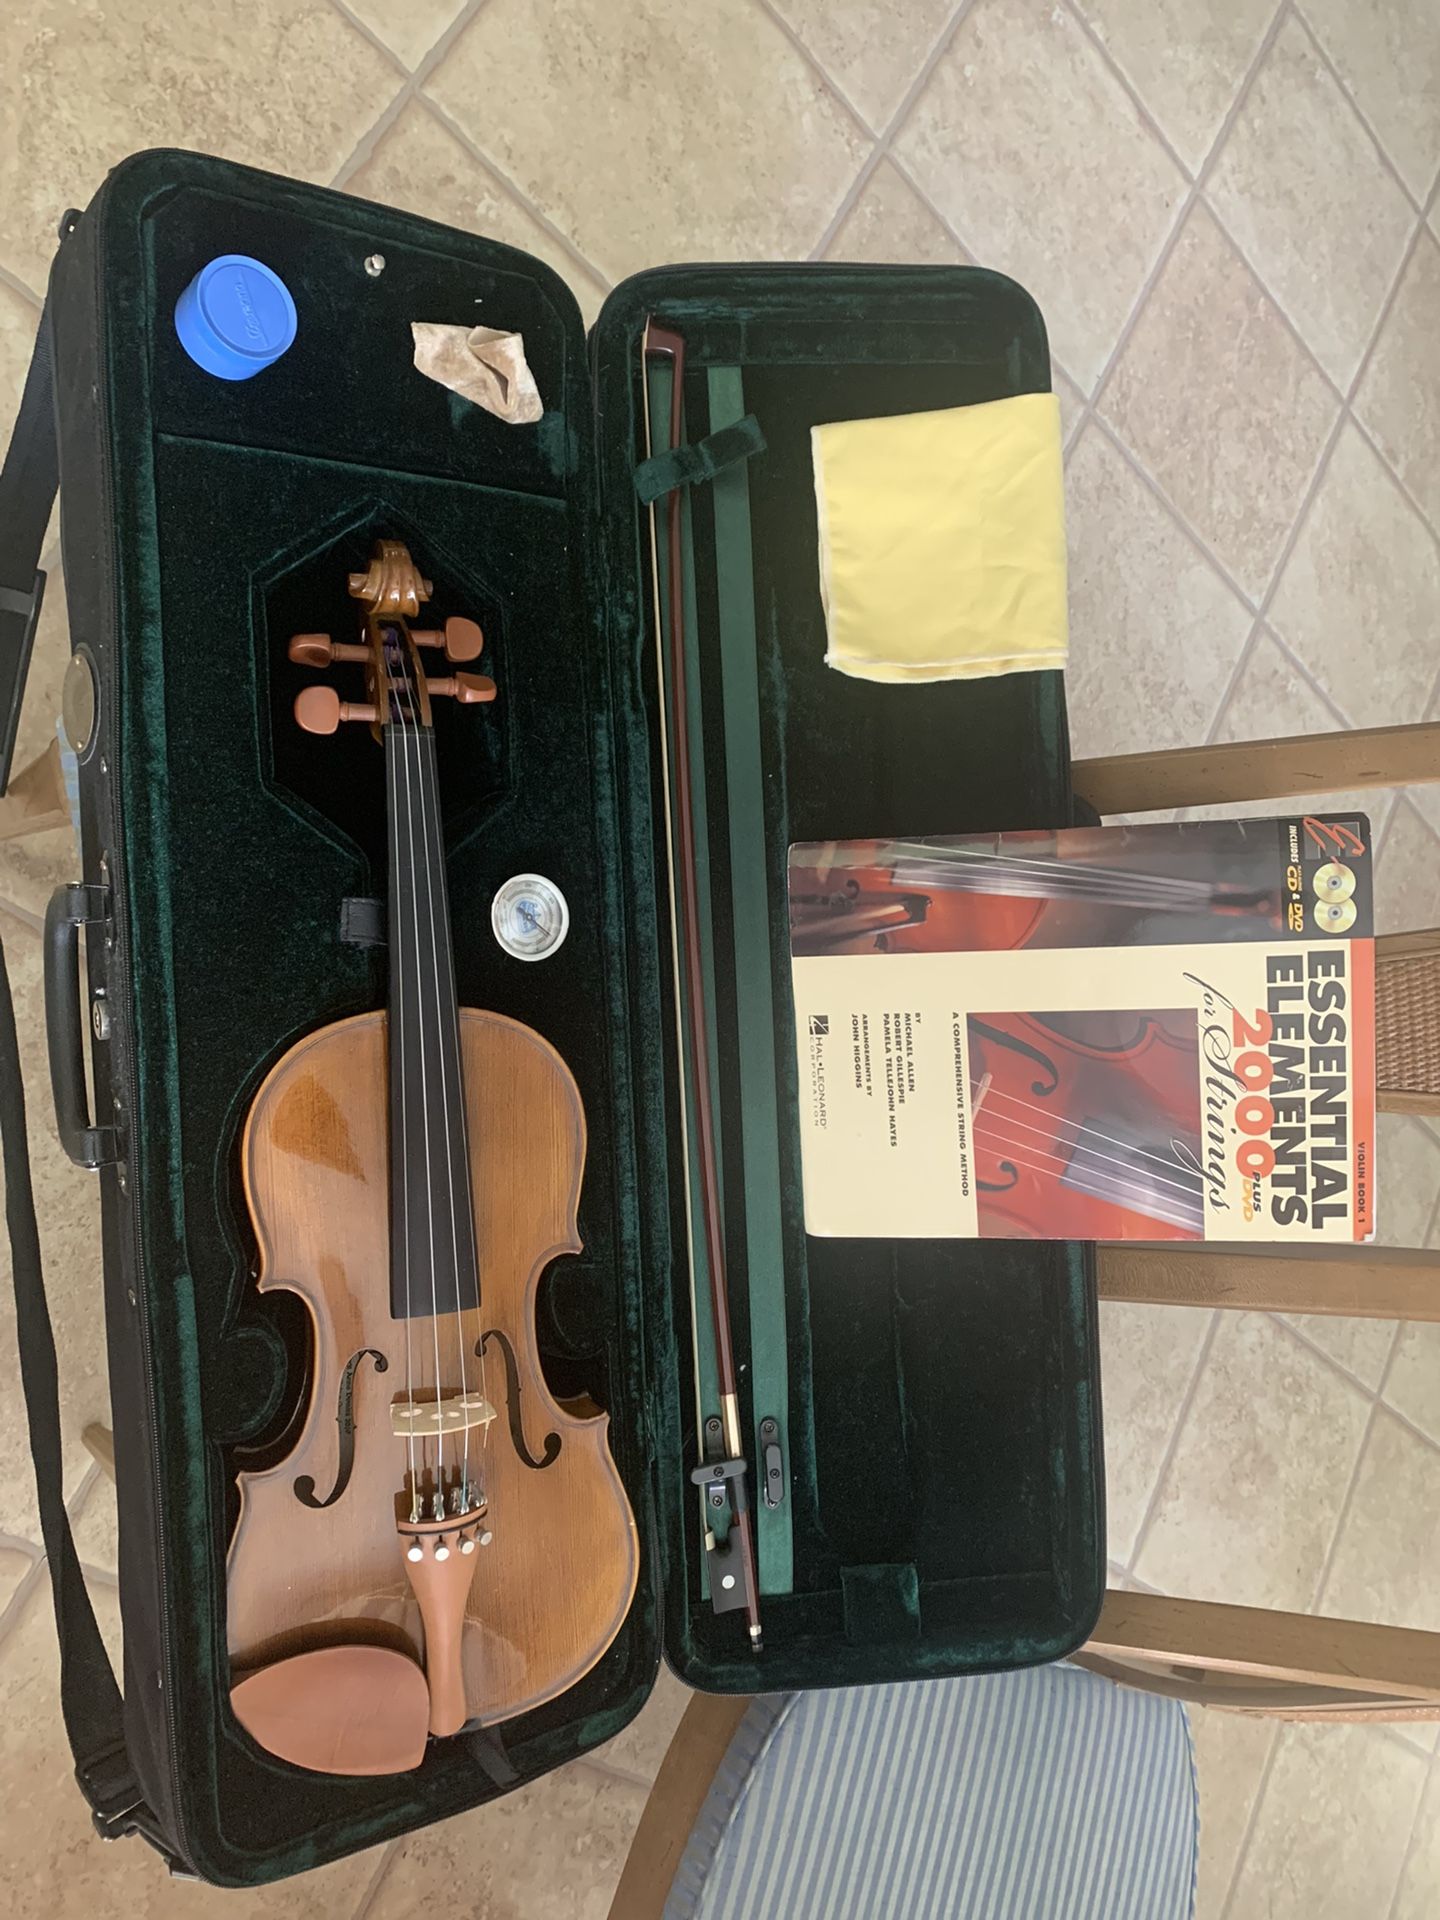 Cremona Violin